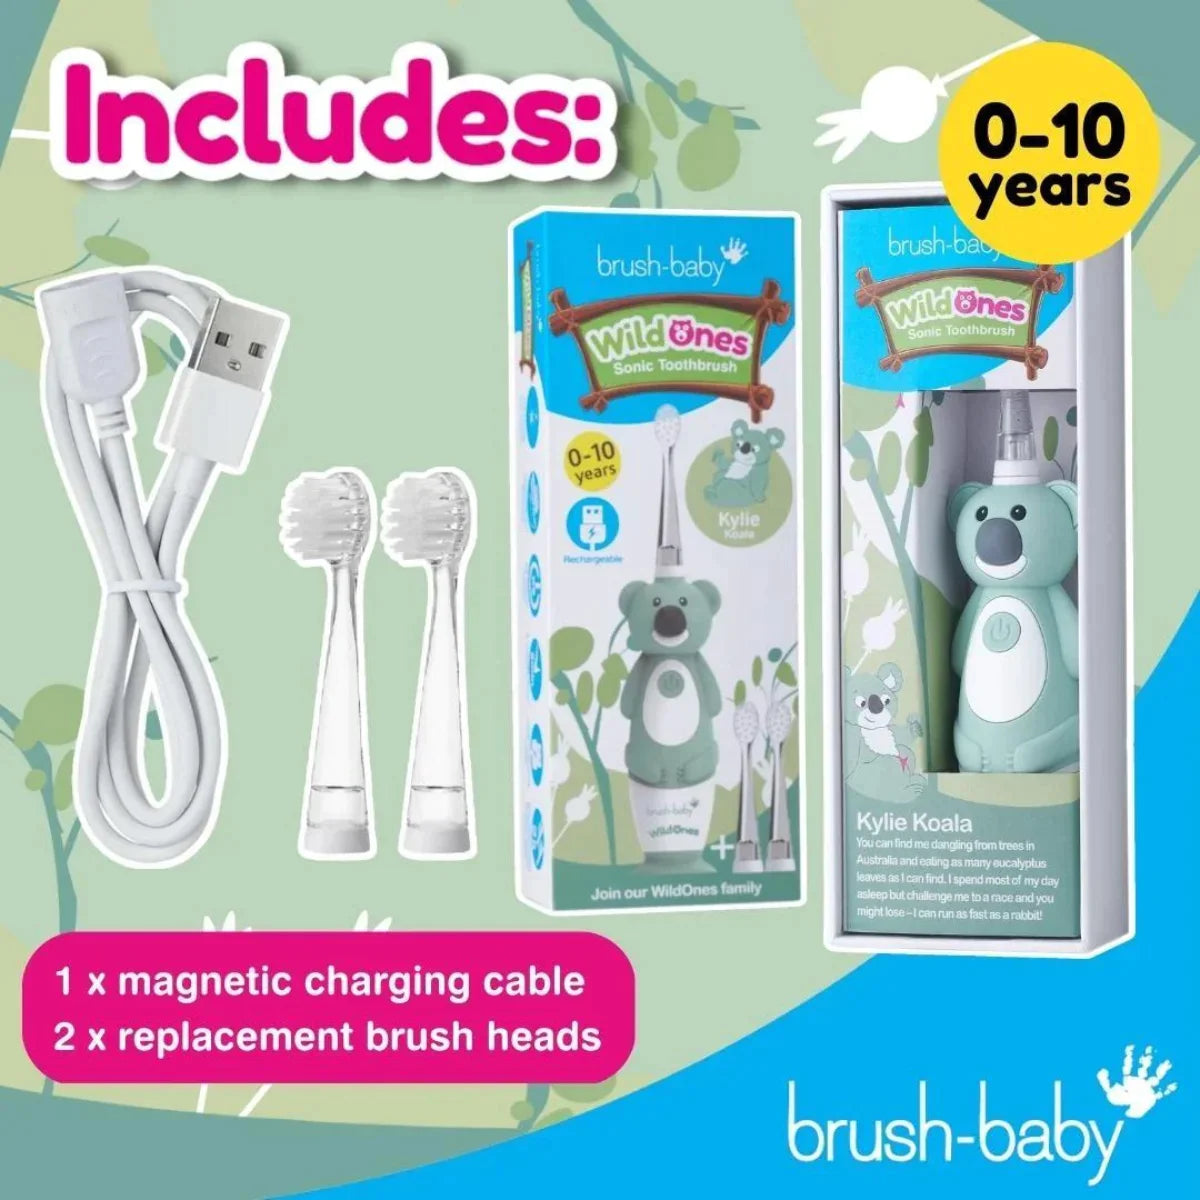 WildOnes™ Koala Kids Electric Rechargeable Toothbrush and WildOnes Applemint Toothpaste